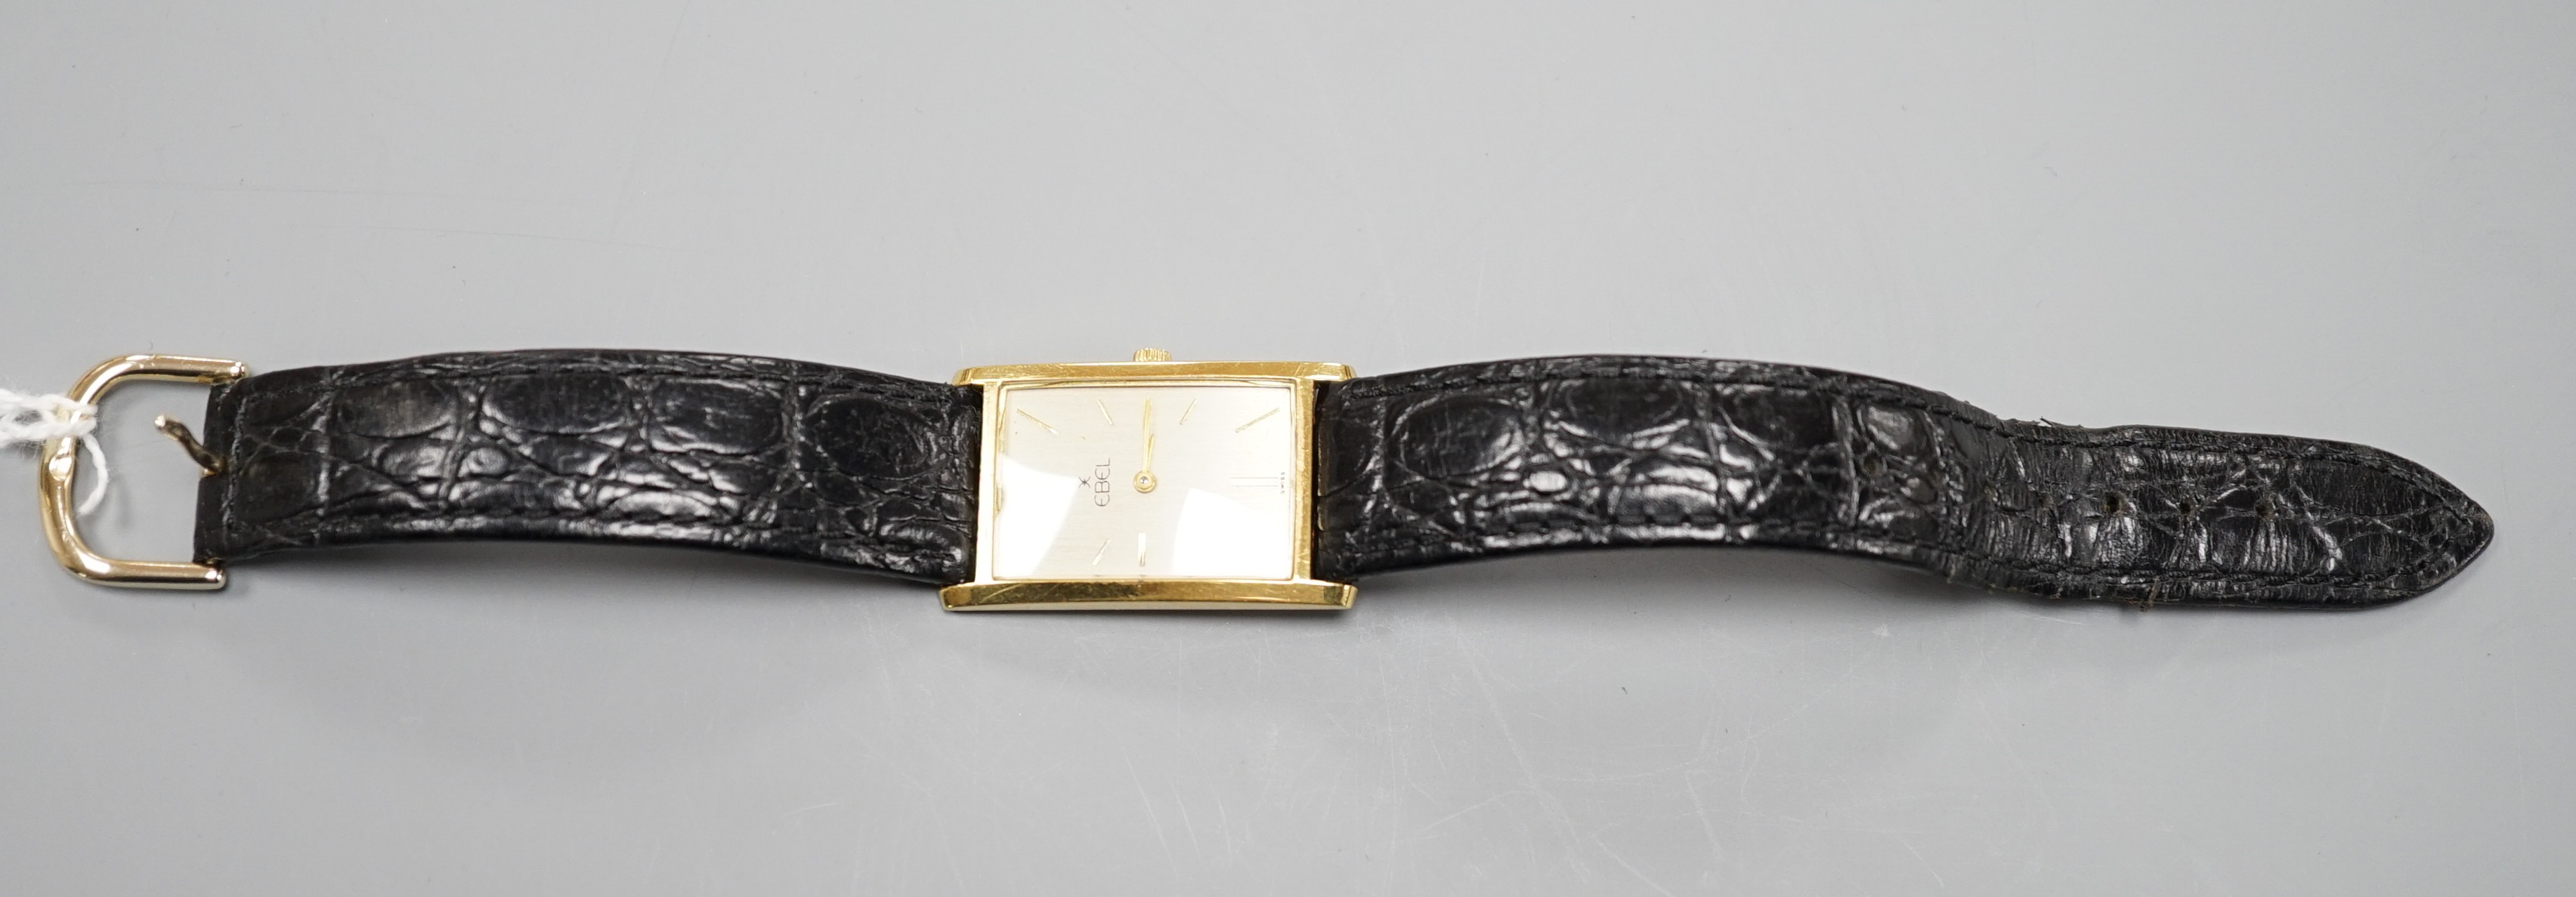 A gentleman's 750 yellow metal Ebel rectangular dial manual wind wrist watch, on associated leather strap, case diameter 22mm, gross weight 24.3 grams.